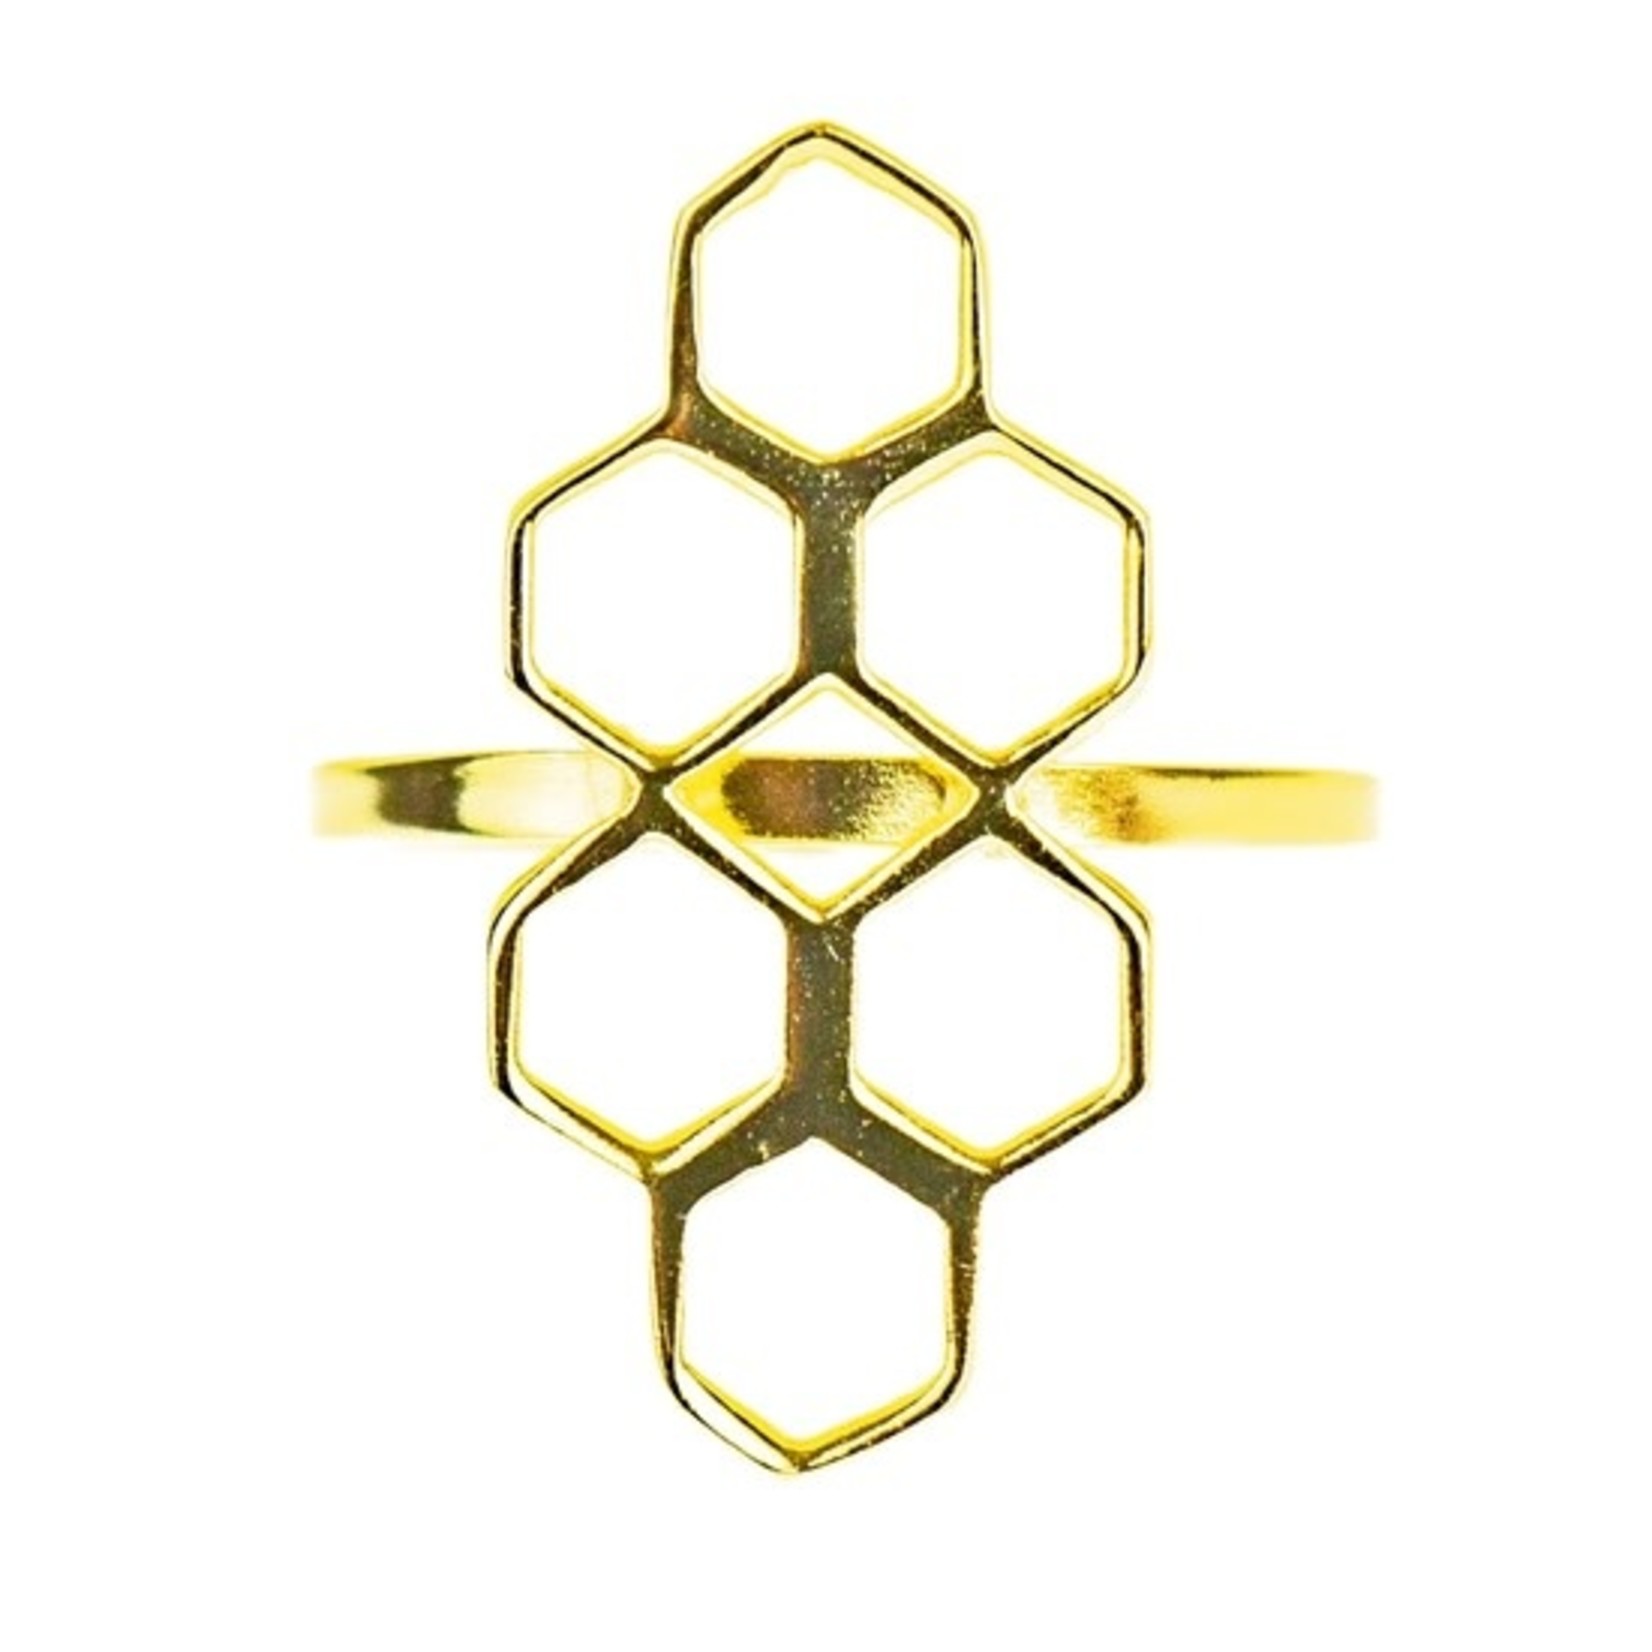 Global Crafts Honeycomb Adjustable Ring, India